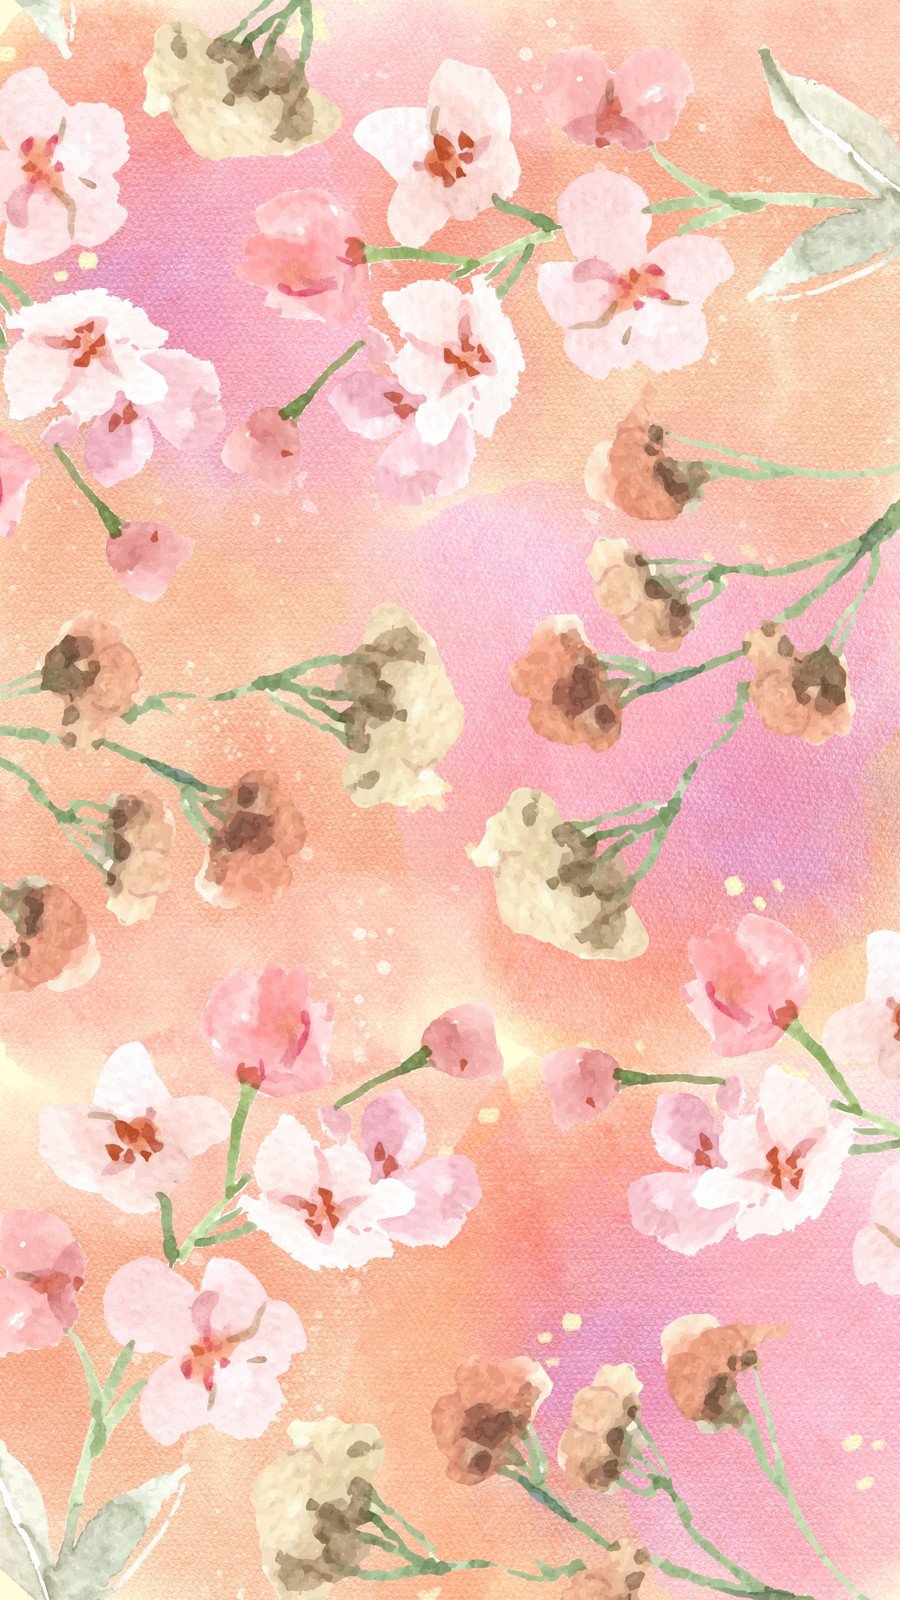 Flower Mobile Wallpaper Images  Free Download on Freepik